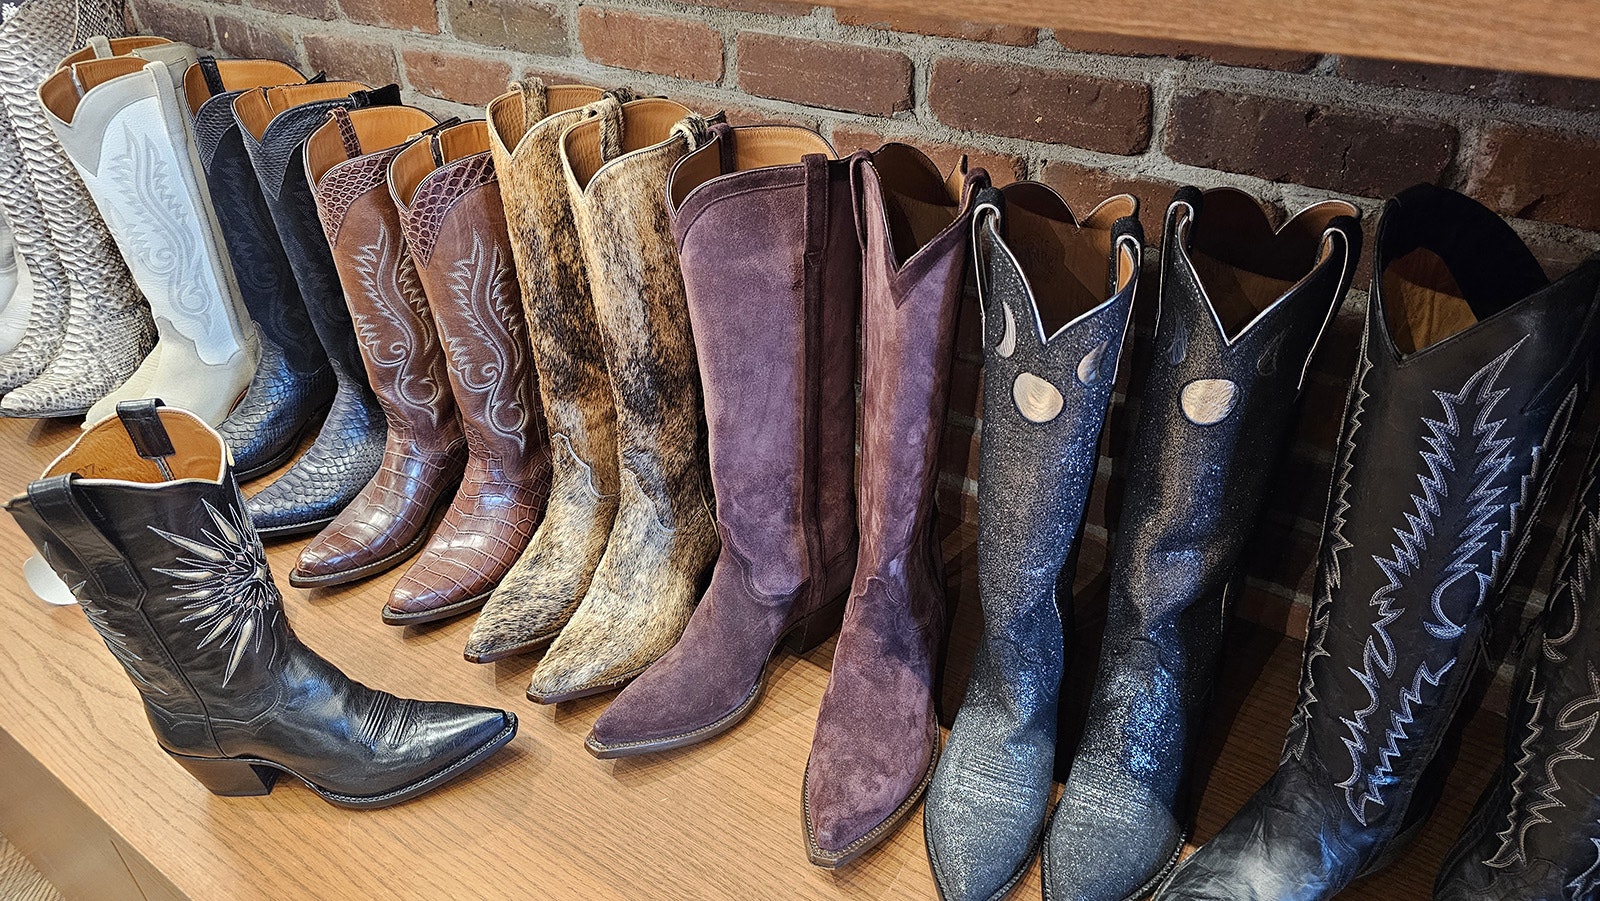 A selection of boots at Kemo Sabe.